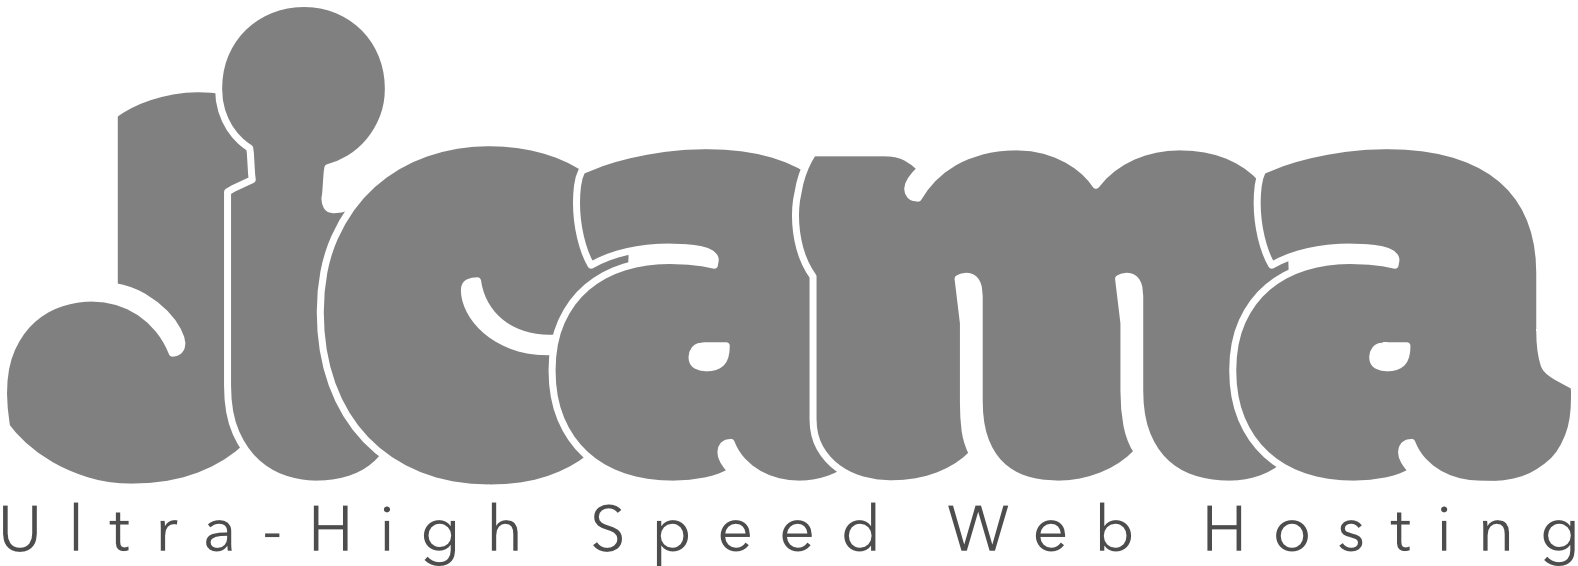 Jicama Ultra-High Speed Web Hosting